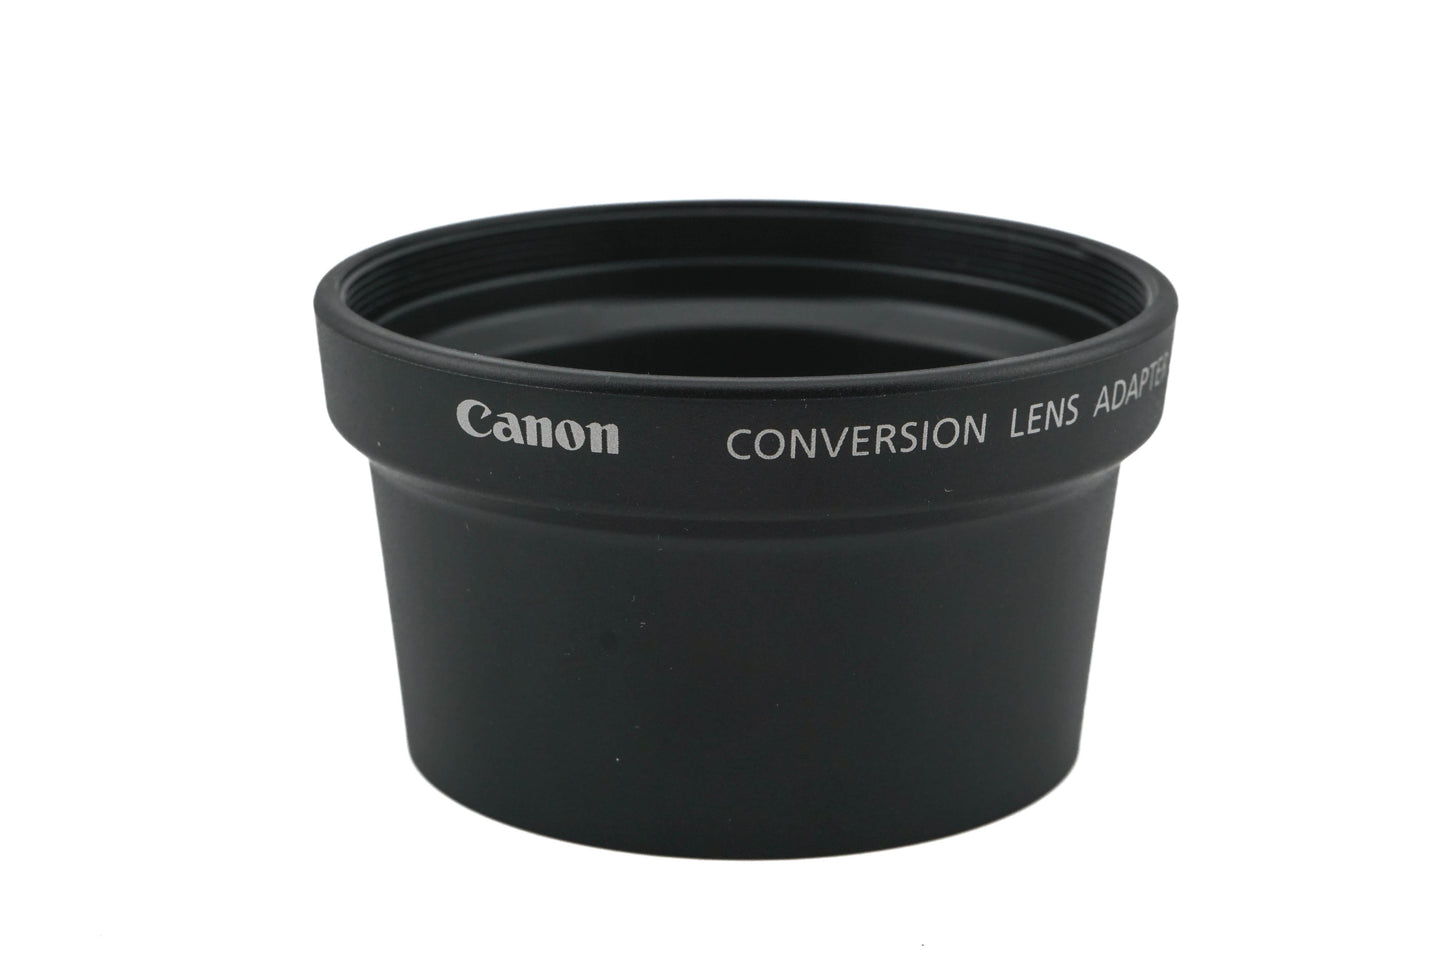 Canon LA-DC58 Conversion Lens Adapter